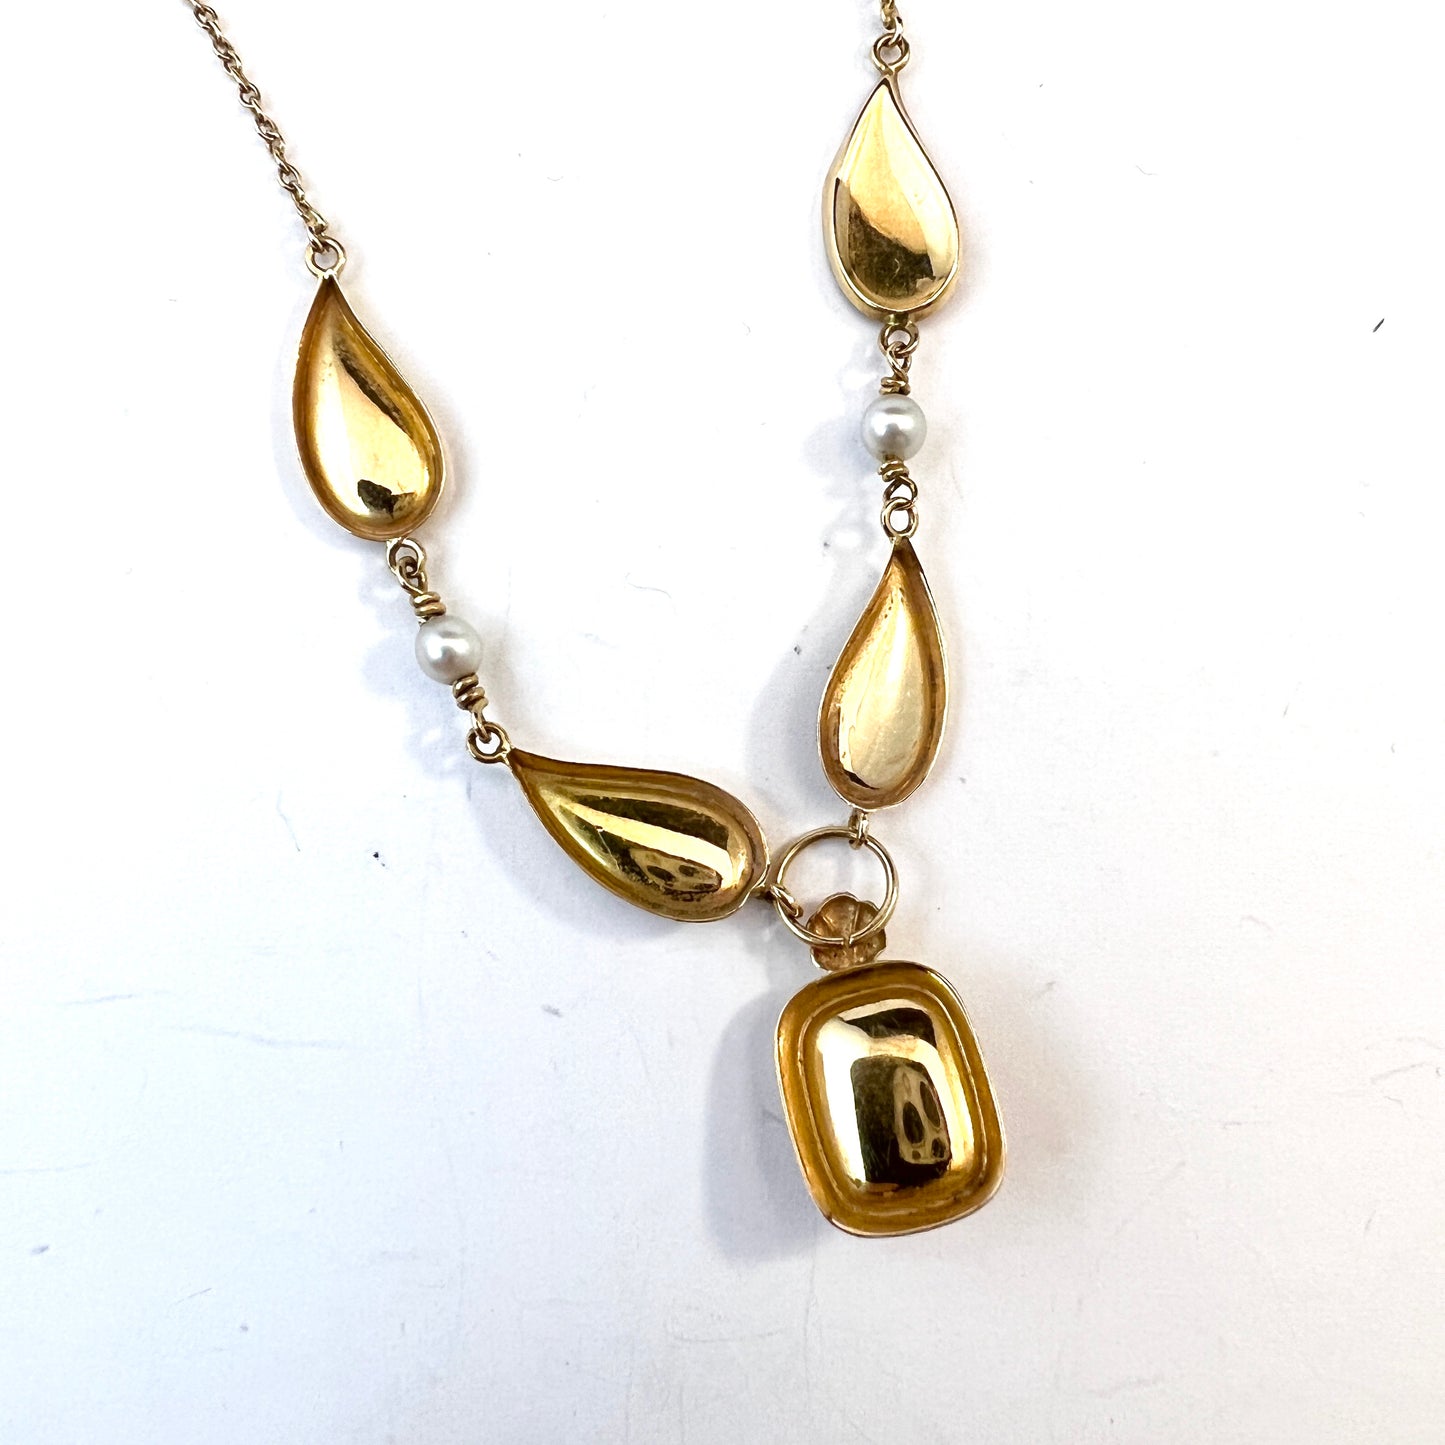 Ceson, Sweden 1950s. Vintage Mid-century 18k Gold Cultured Pearl Necklace.